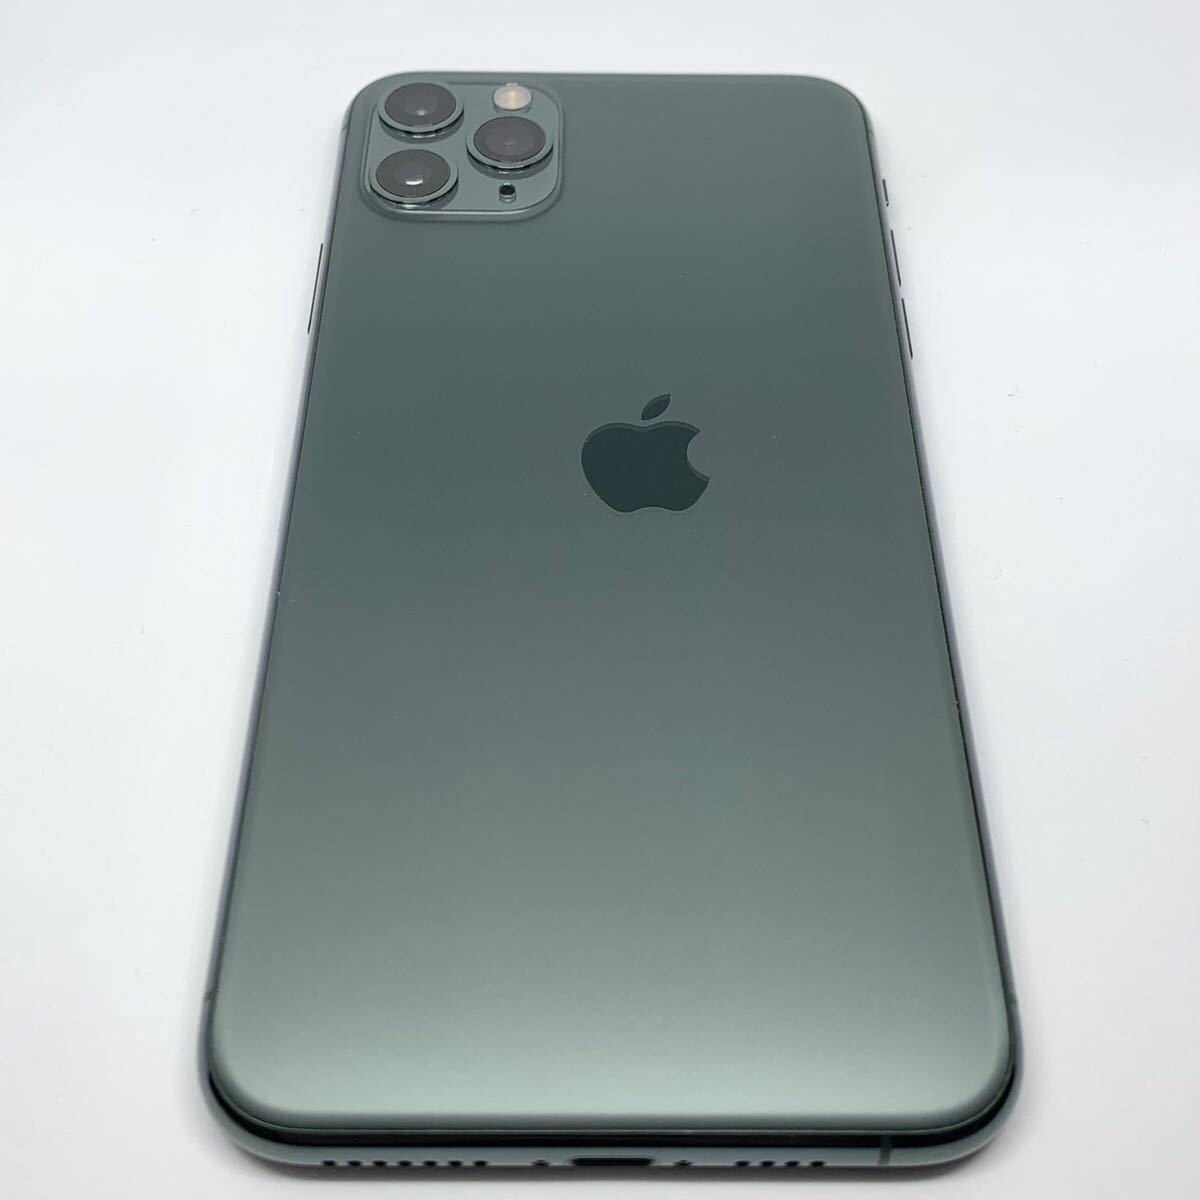 Logotipo de Apple mal impreso del iPhone 11 Pro